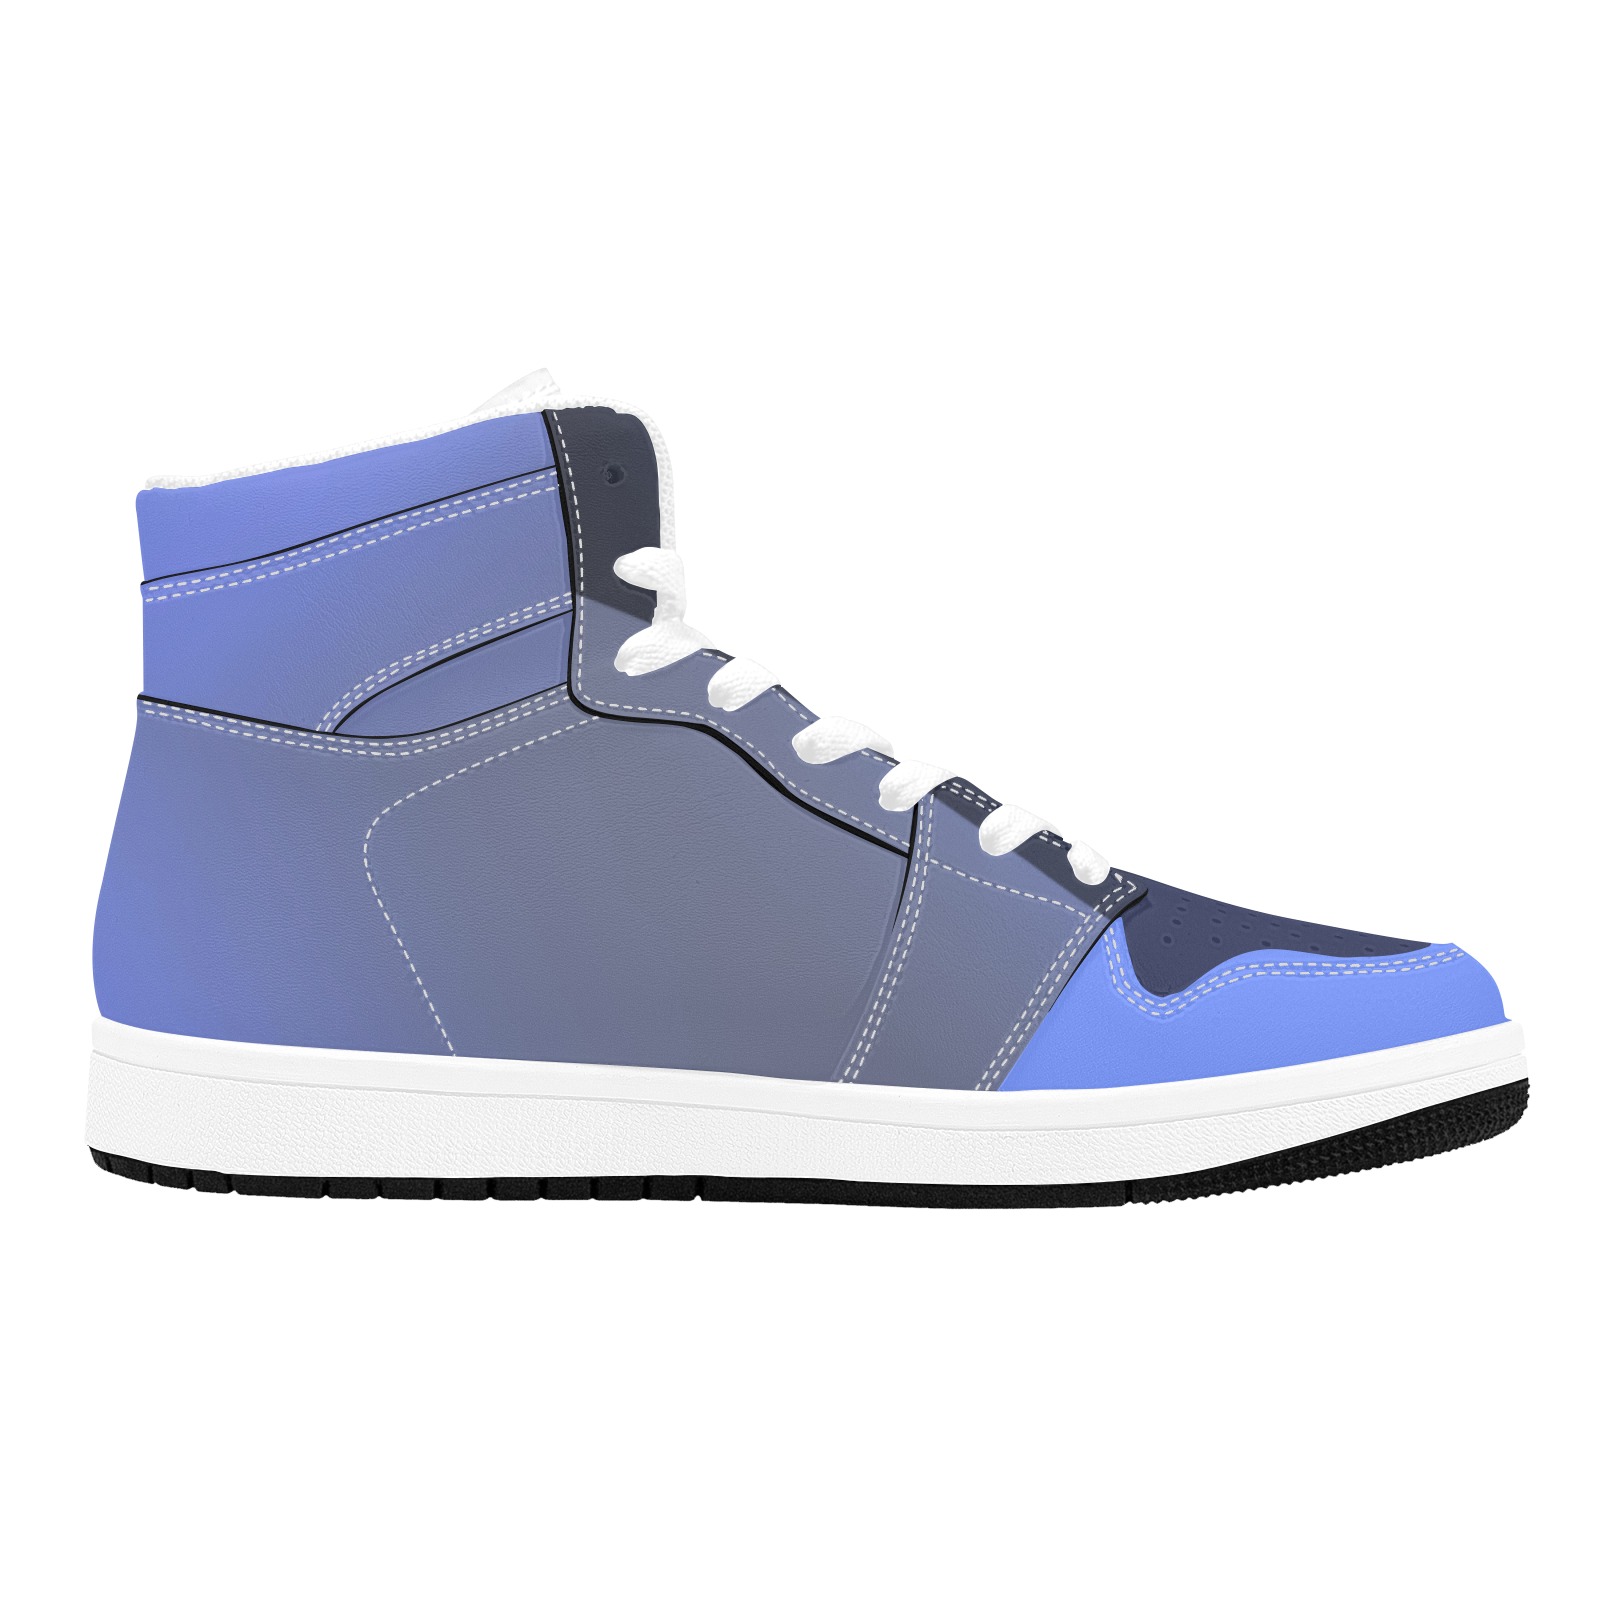 Three Tone Blue Unisex High Top Sneakers (Model 20042)